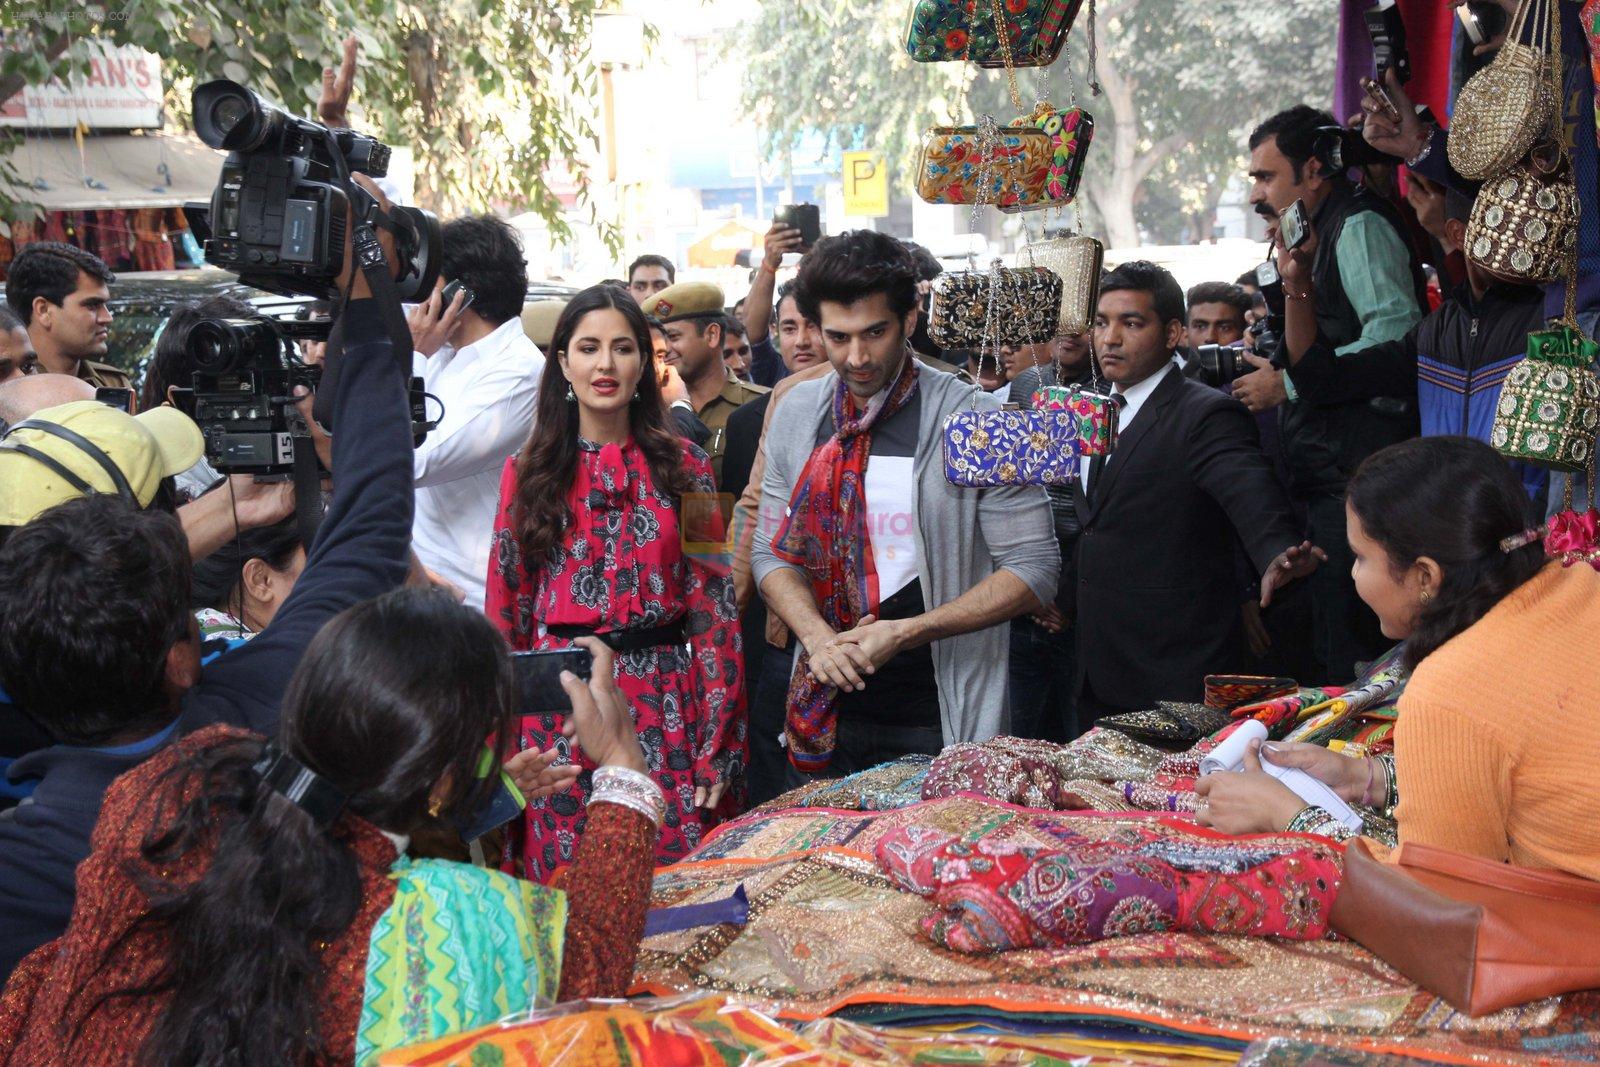 Katrina Kaif, Aditya Roy Kapoor goes shopping in Janpath for promoting Fitoor on 6th Feb 2016